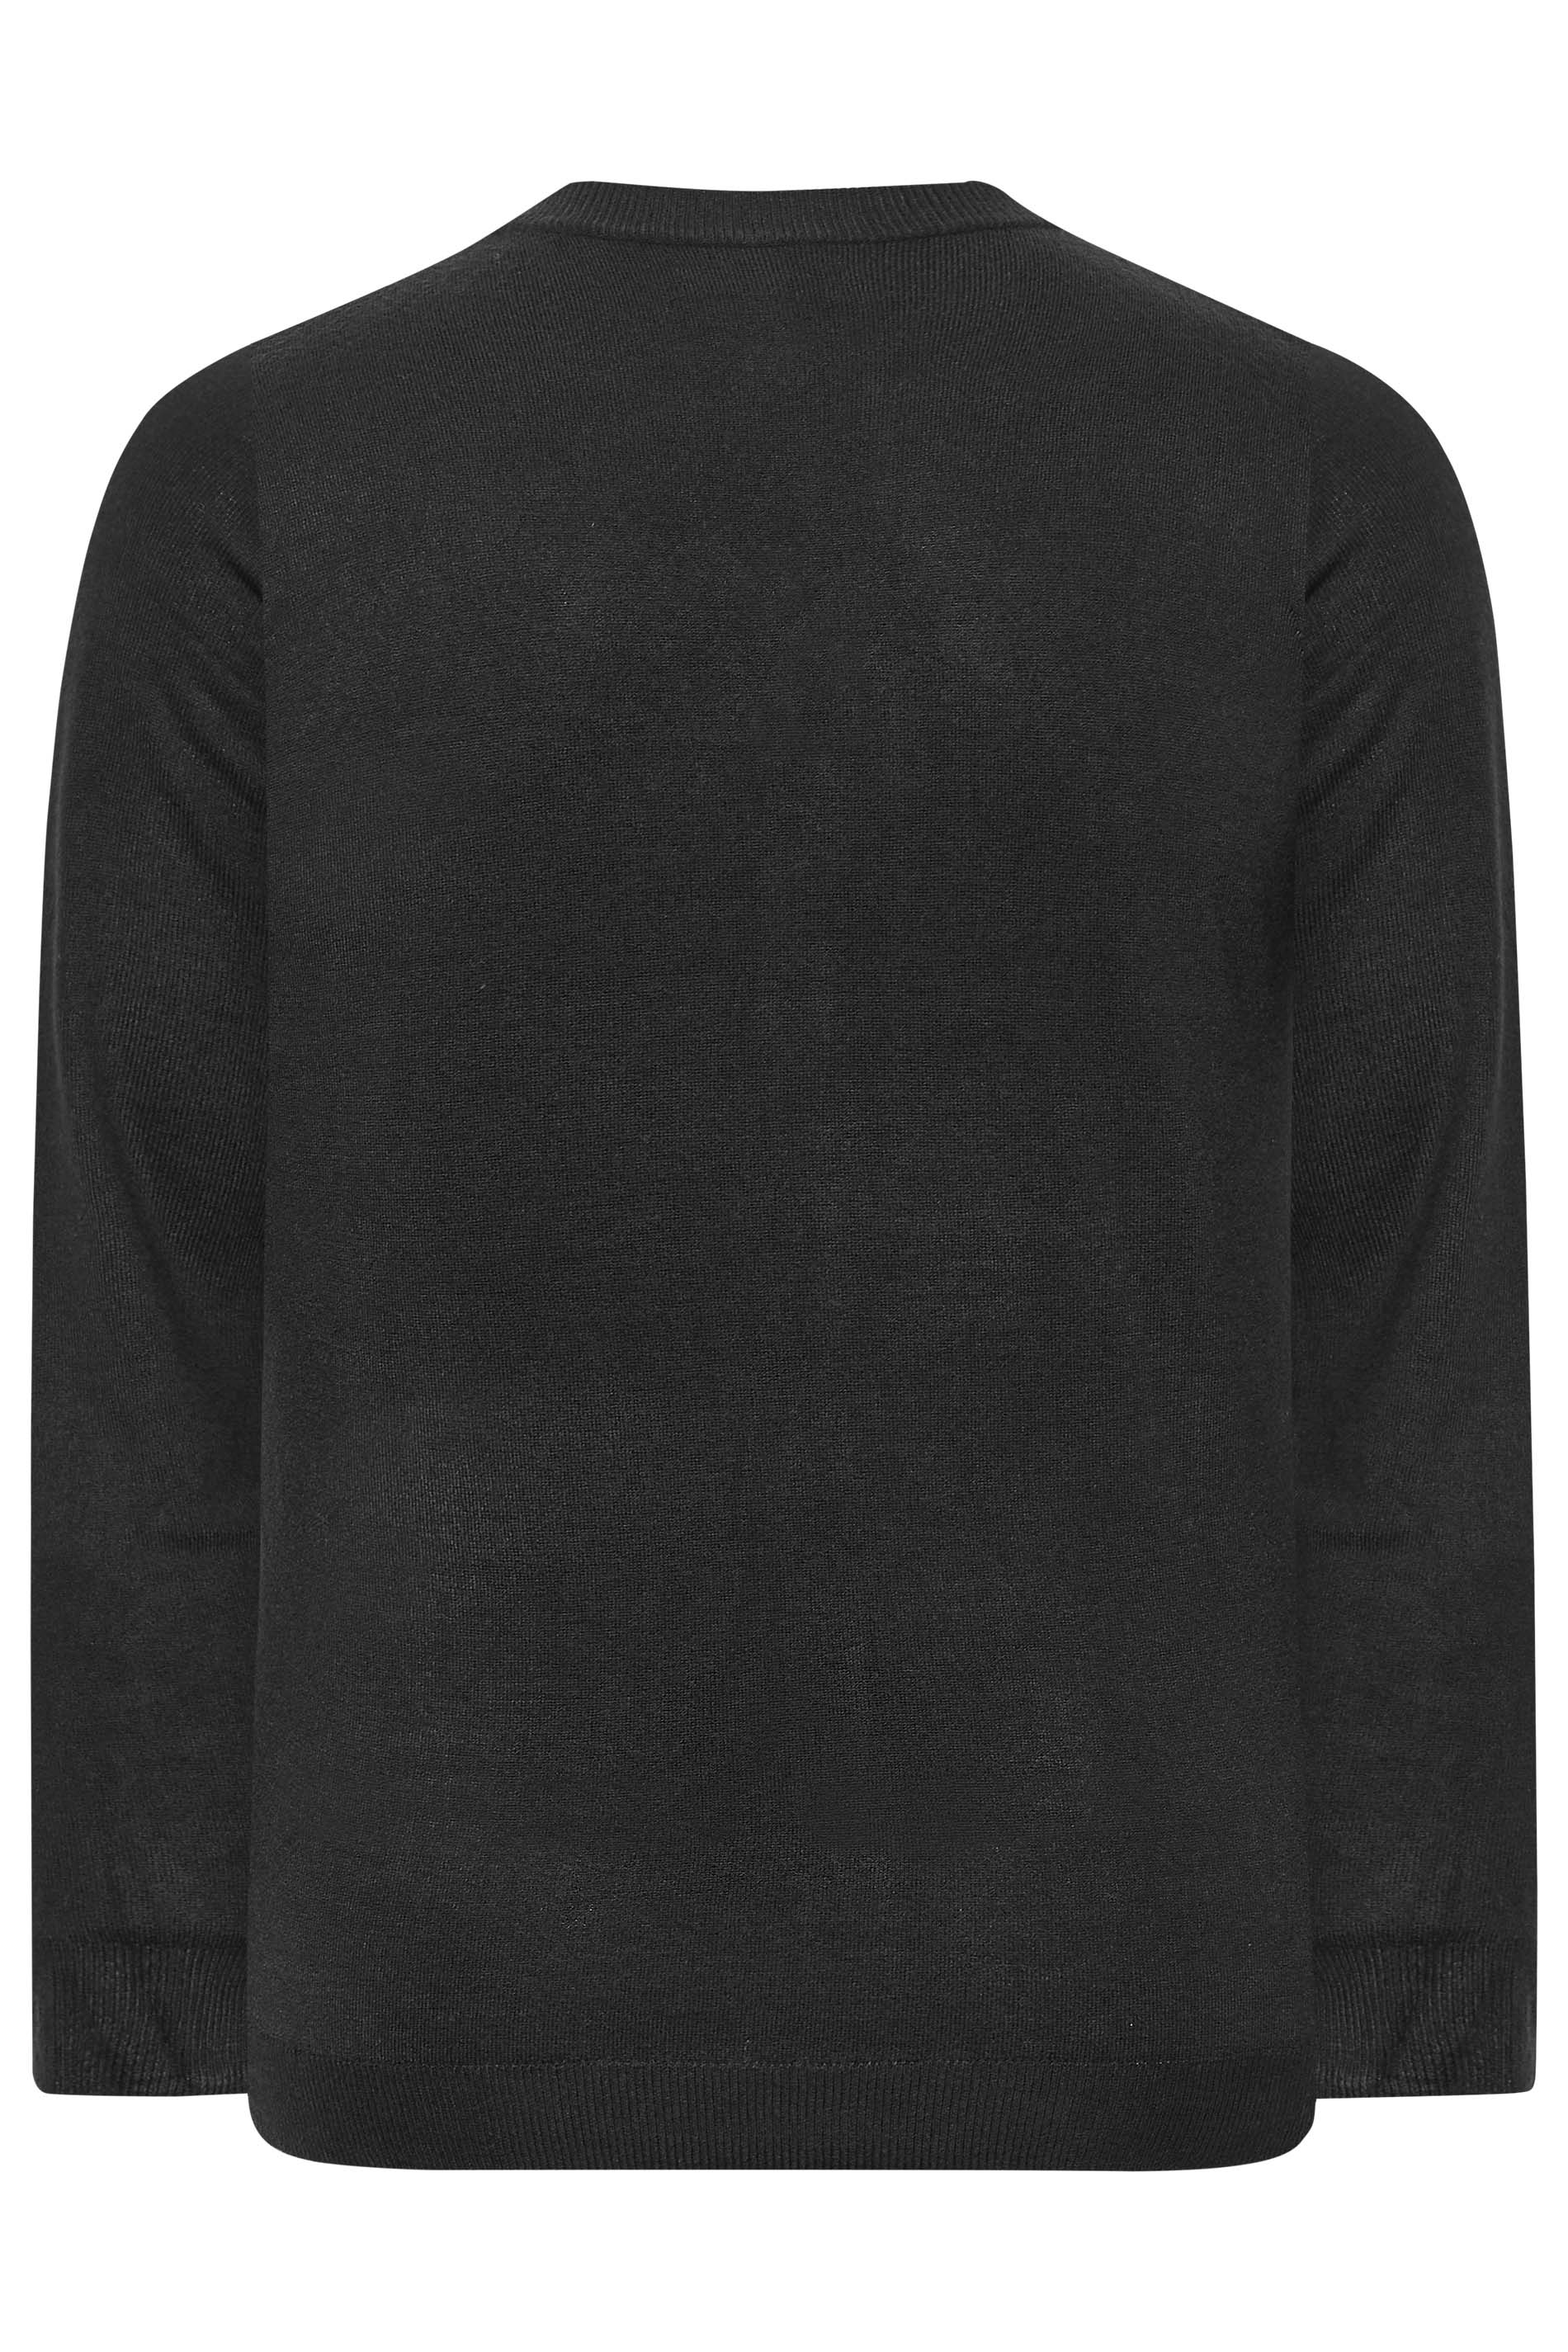 BadRhino Black Essential Knitted Cardigan | BadRhino